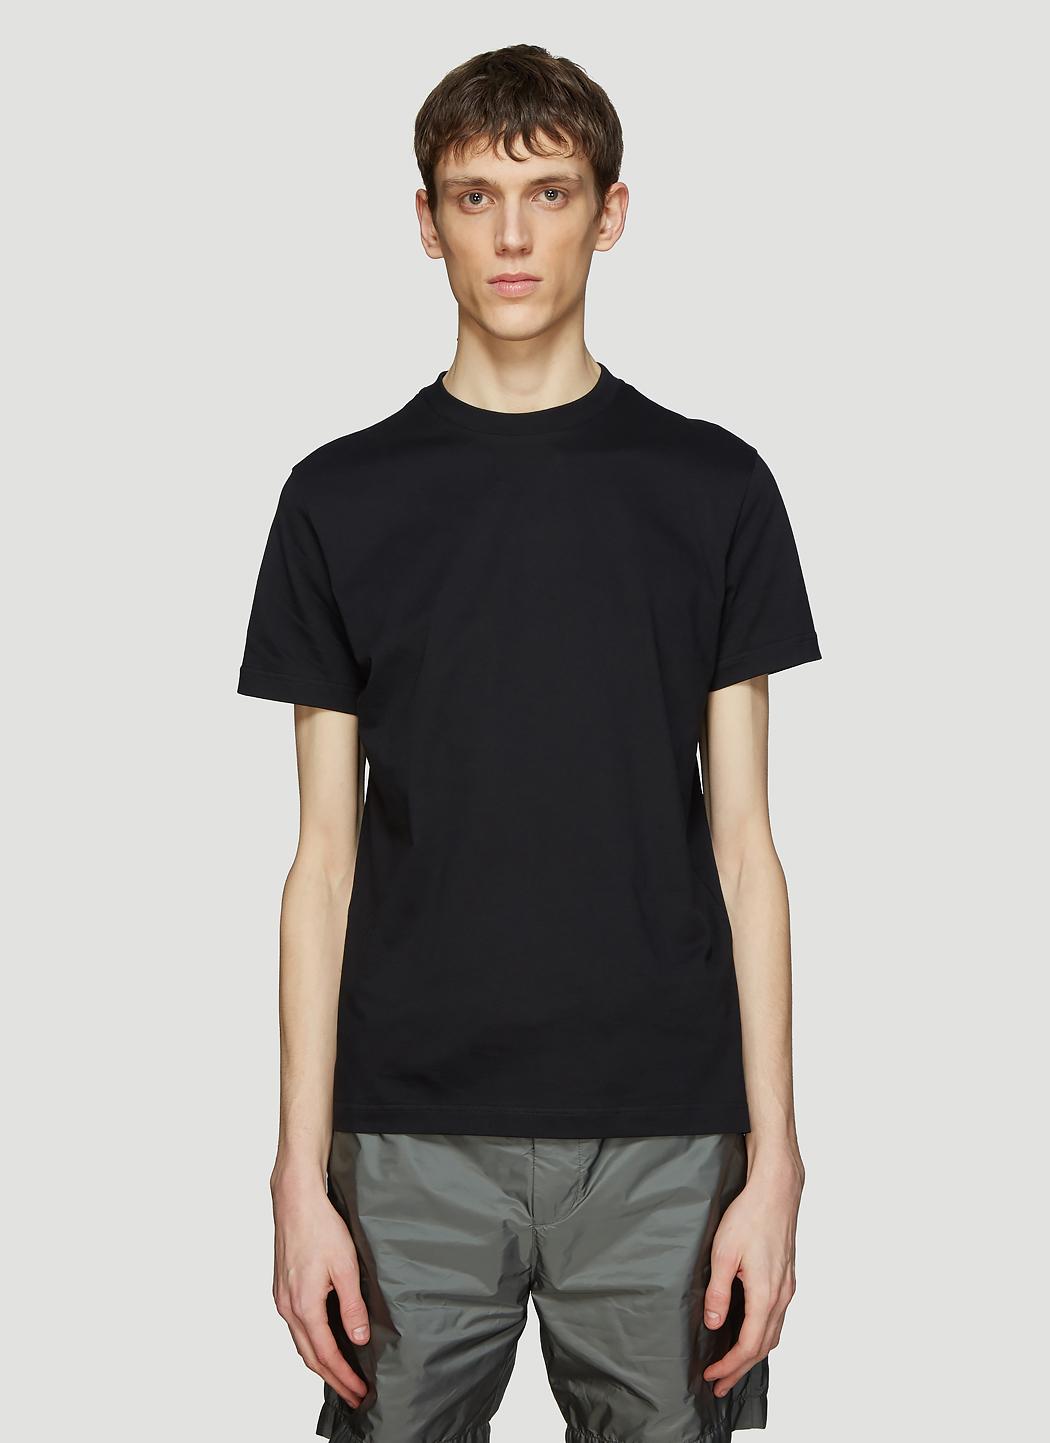 Prada Cotton 3 Pack Classic T-shirt In Black for Men - Lyst